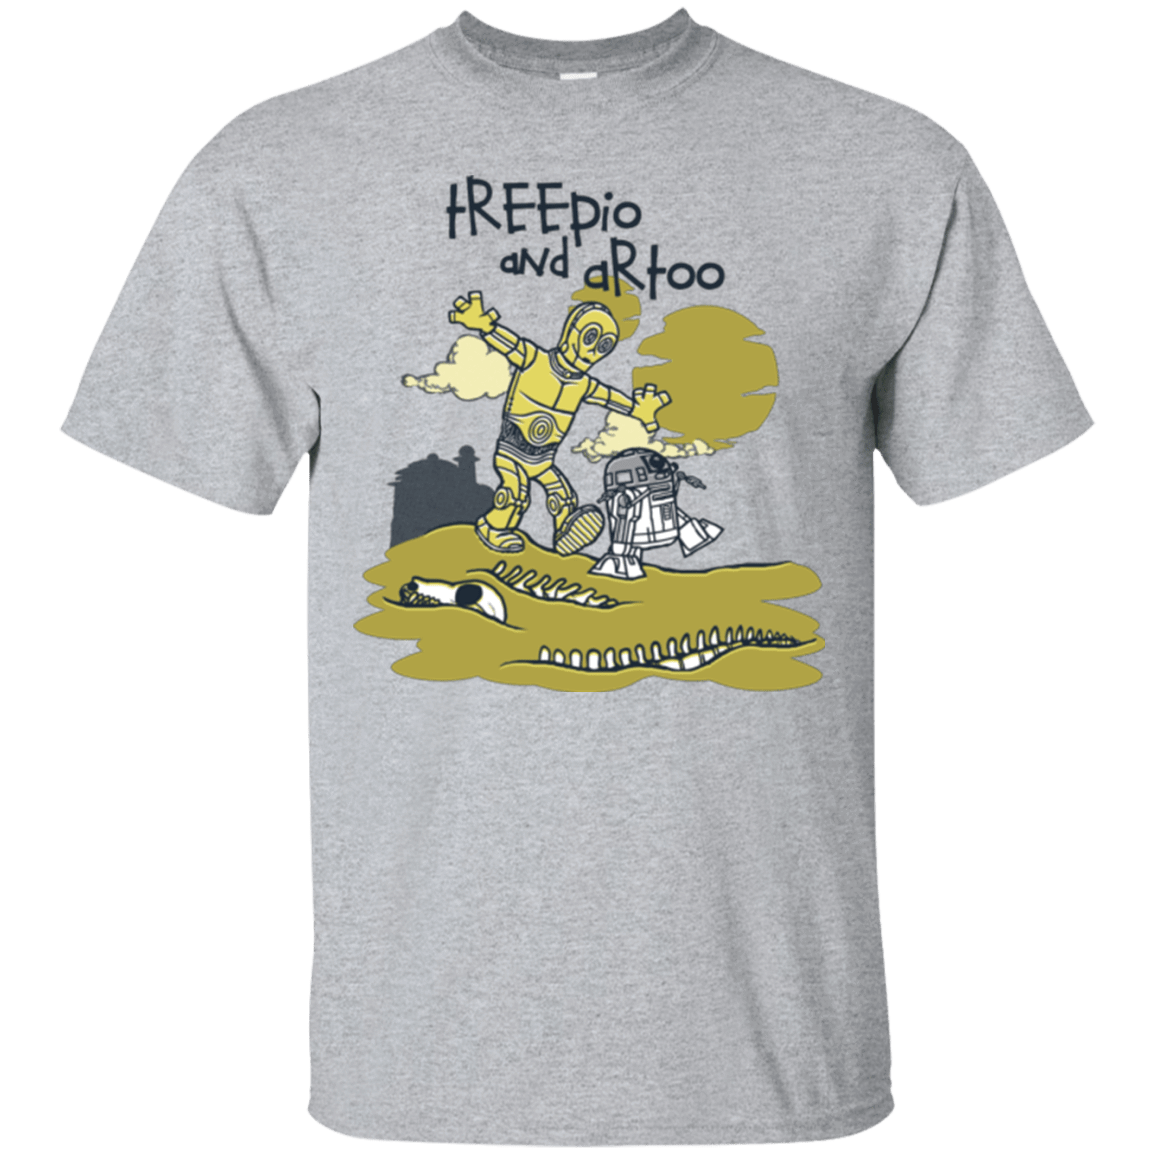 T-Shirts Sport Grey / Small Treepio and Artoo T-Shirt